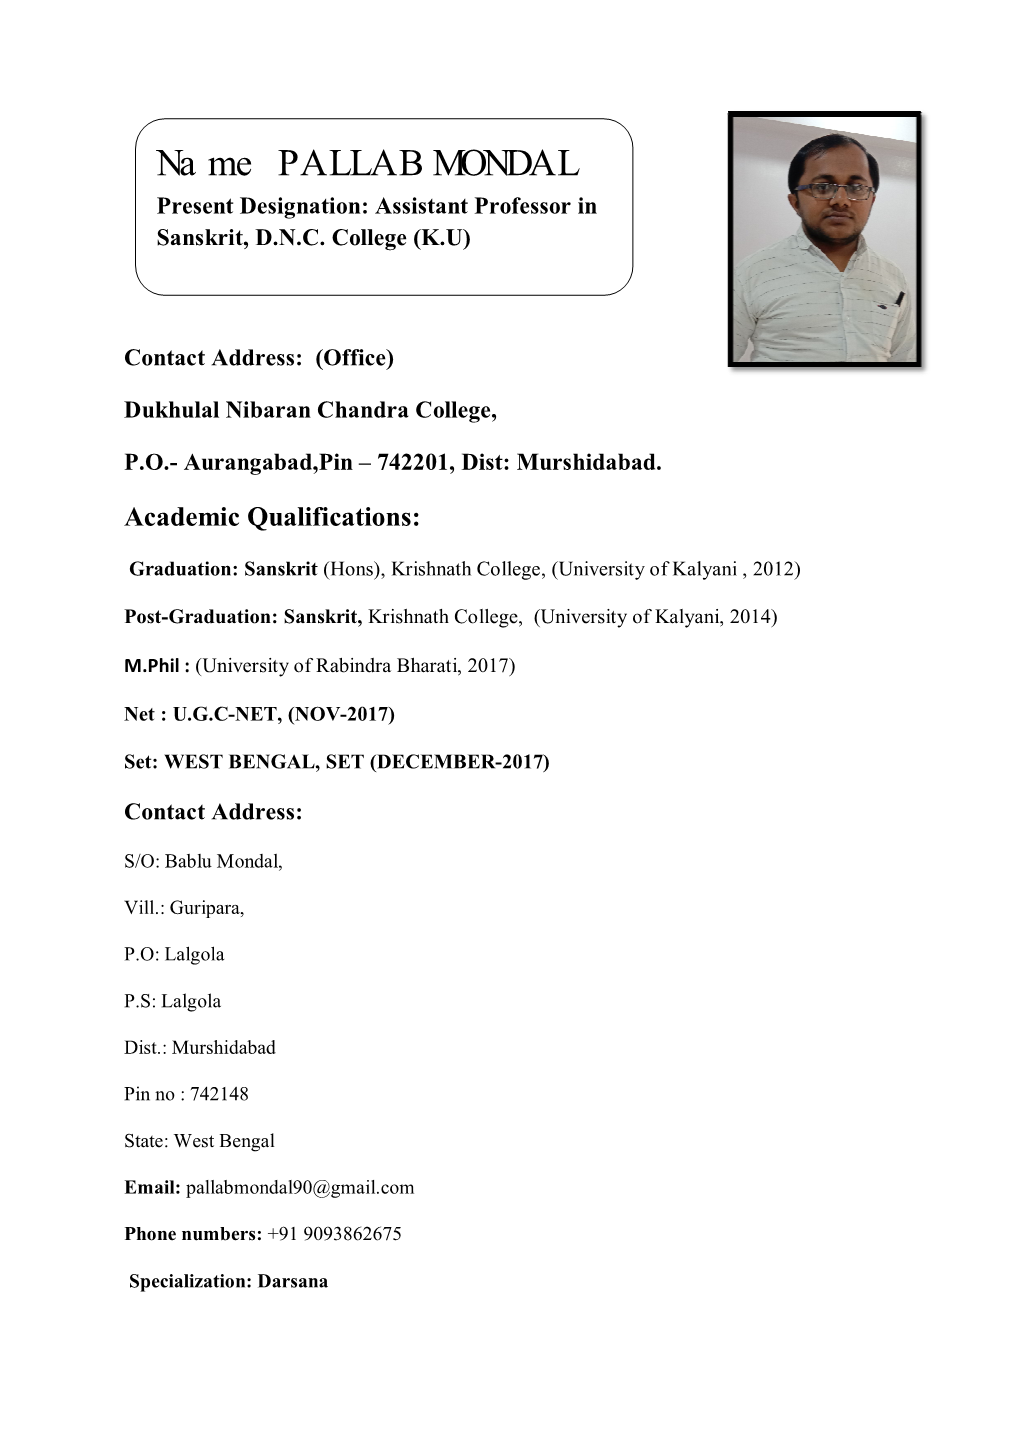 Name PALLAB MONDAL Present Designation: Assistant Professor in Sanskrit, D.N.C